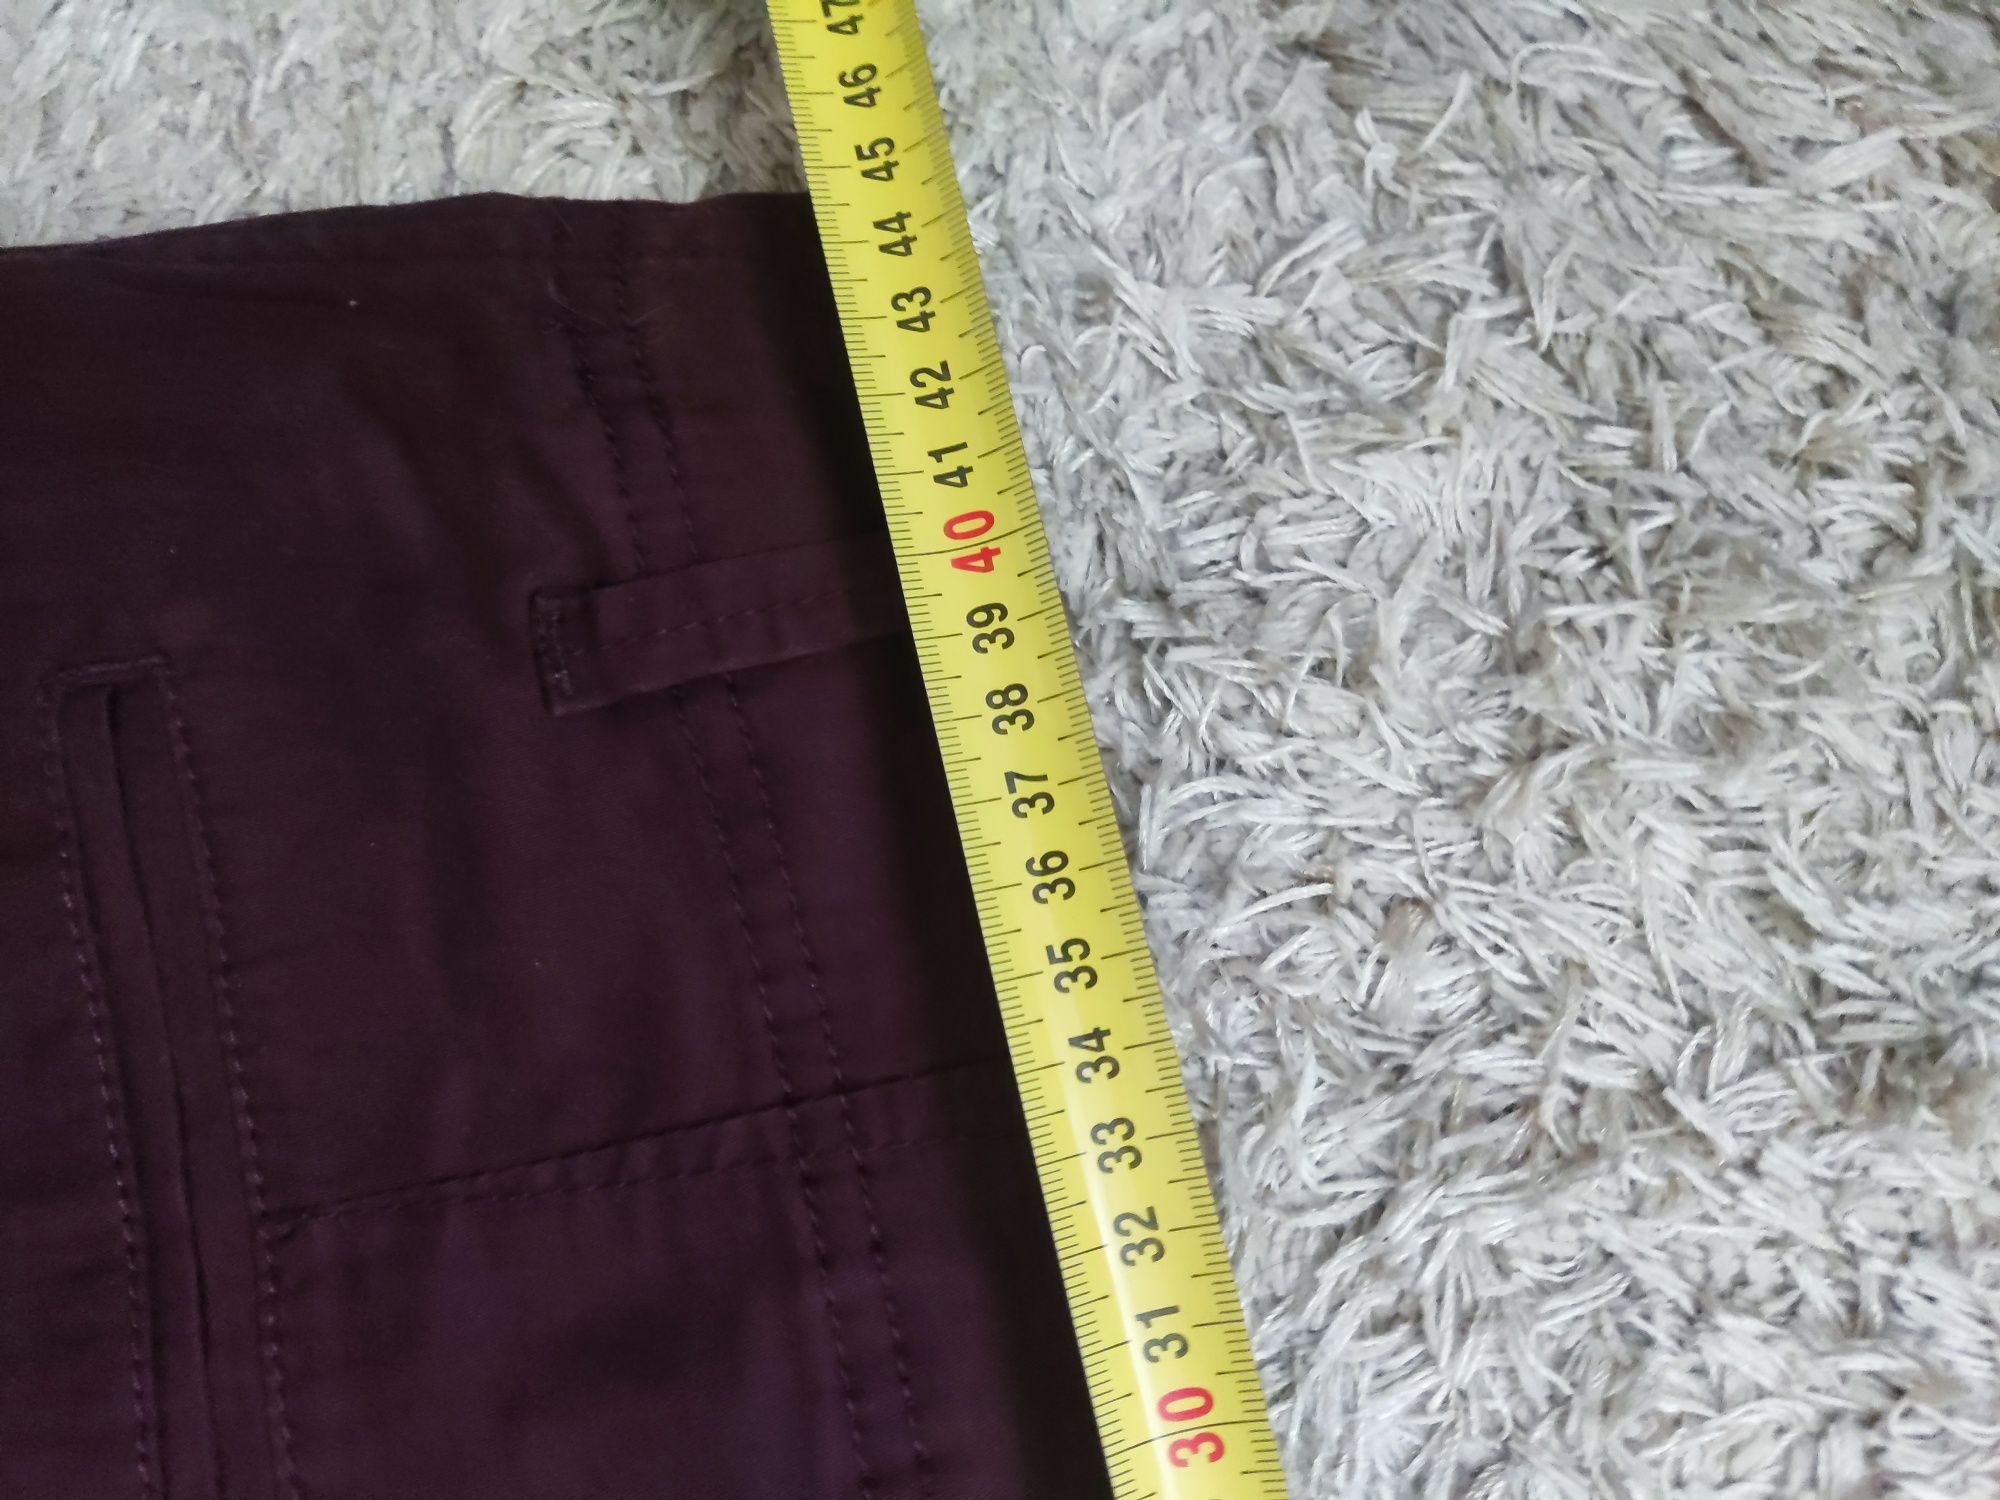 Chinos spodnie nowe burgund/bordowy 34/34 lub 33/34